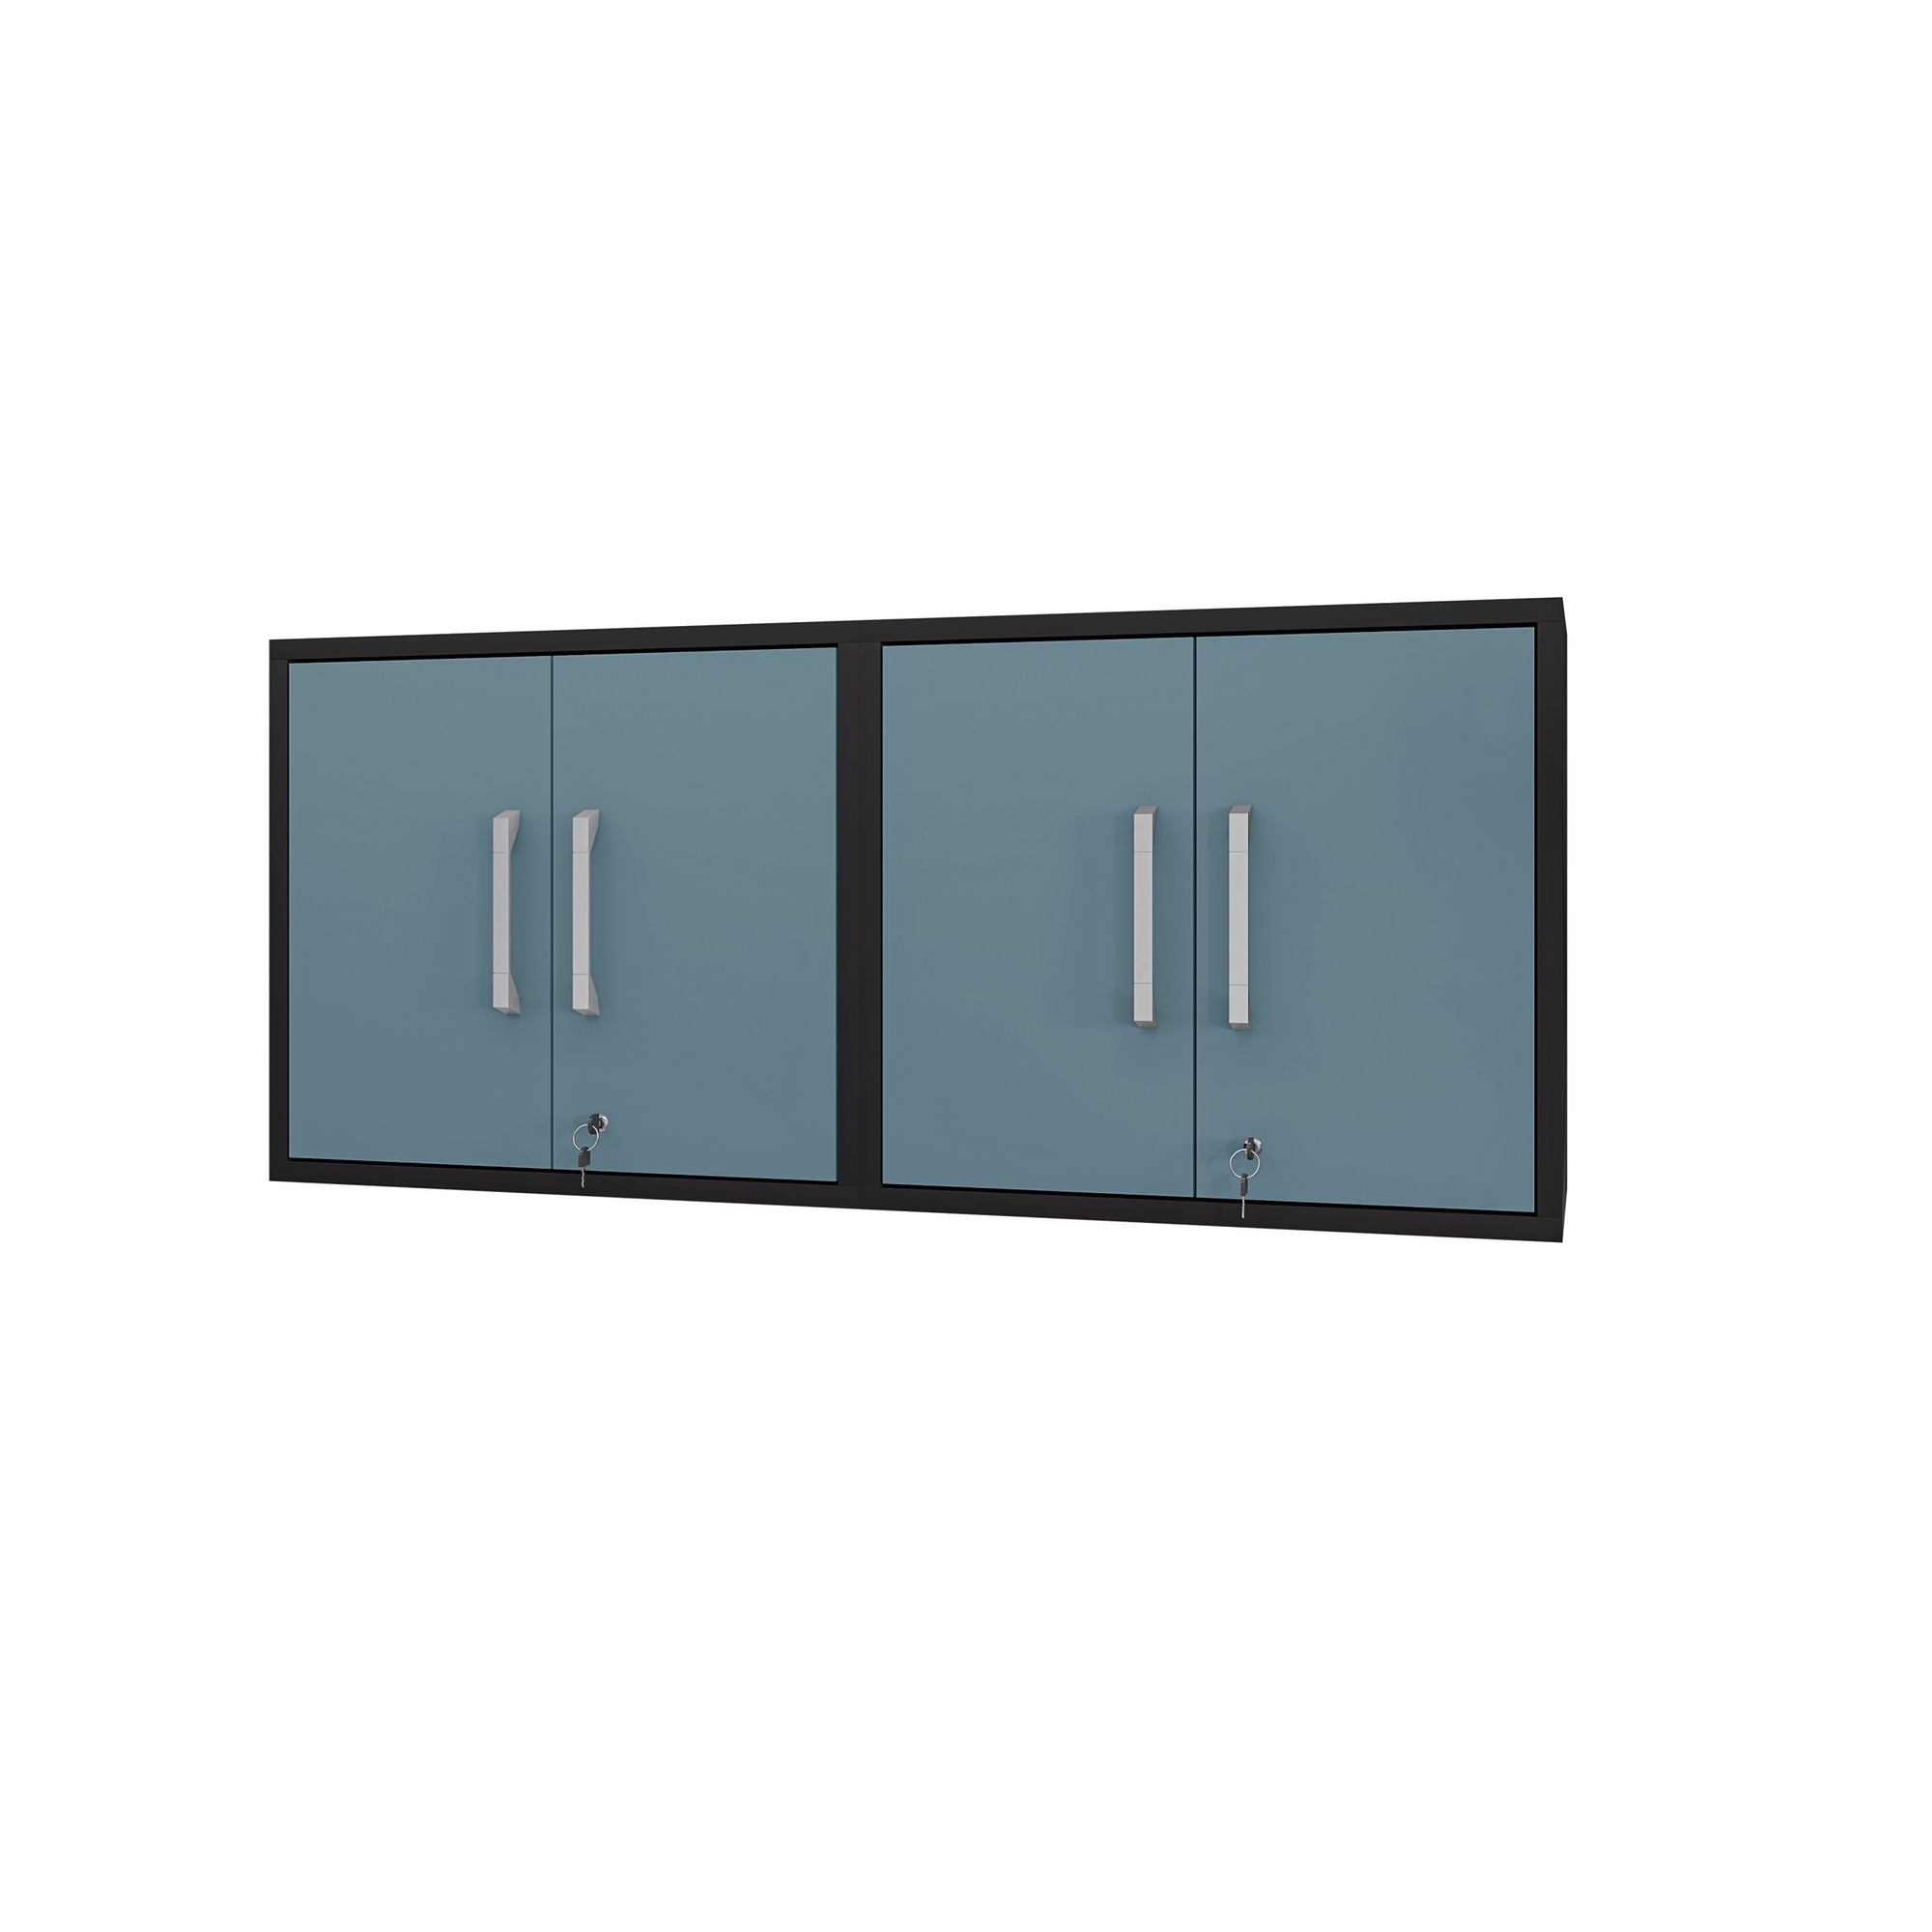 Manhattan Comfort, Eiffel Floating Garage Cabinet Black Aqua Set of 2 Height 25.59 in, Width 56.7 in, Color Blue, Model 2-251BMC